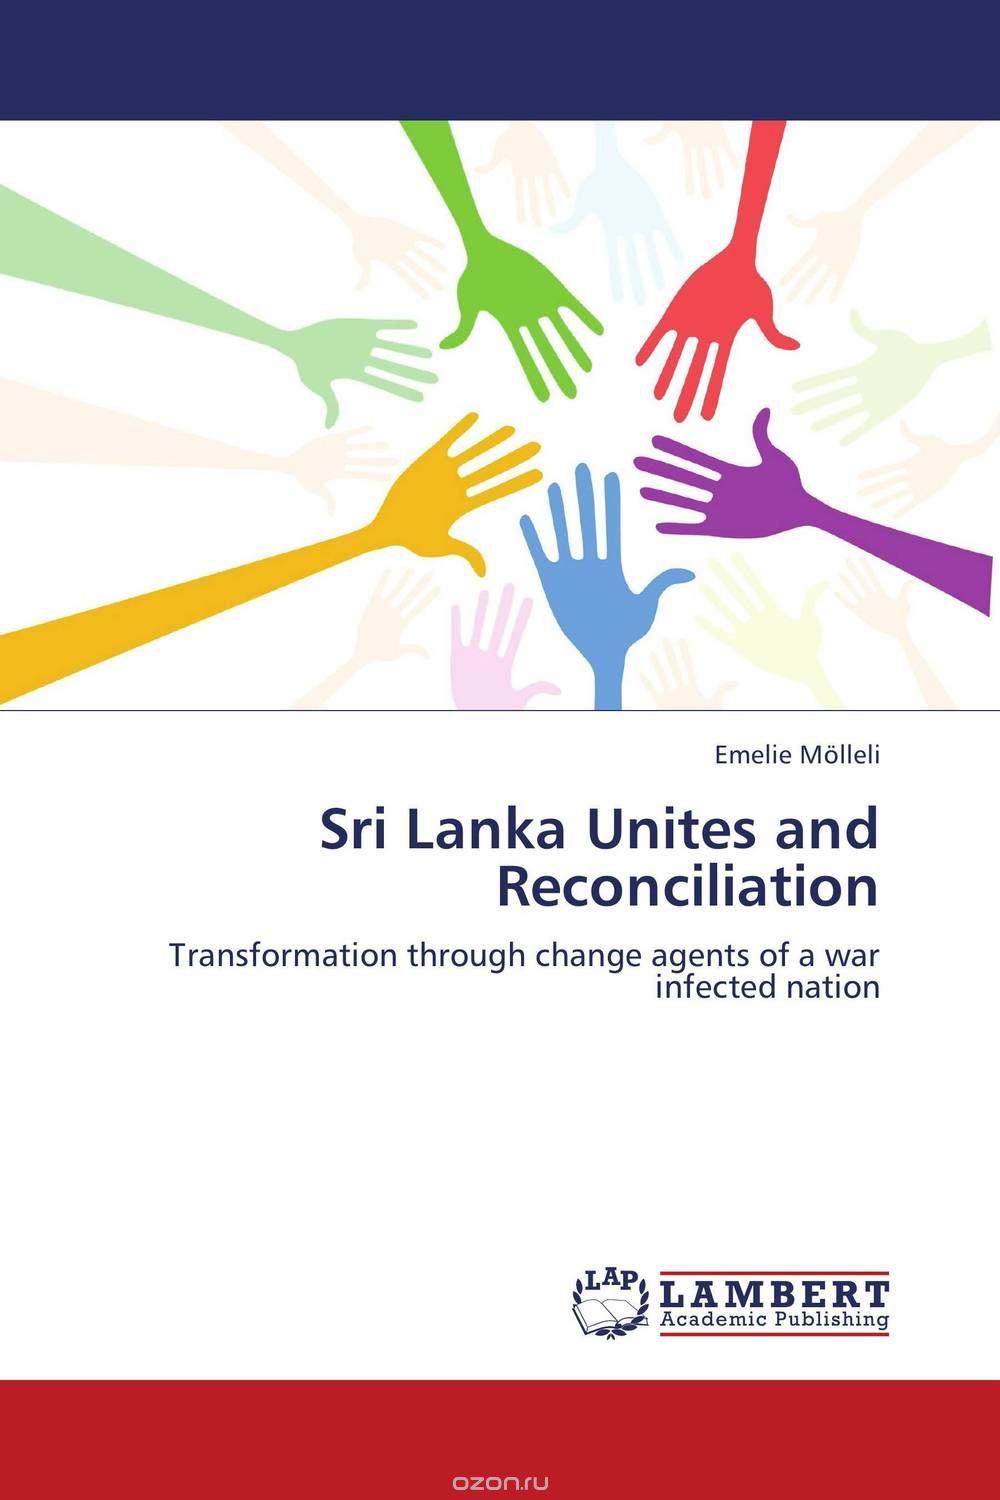 Sri Lanka Unites and Reconciliation